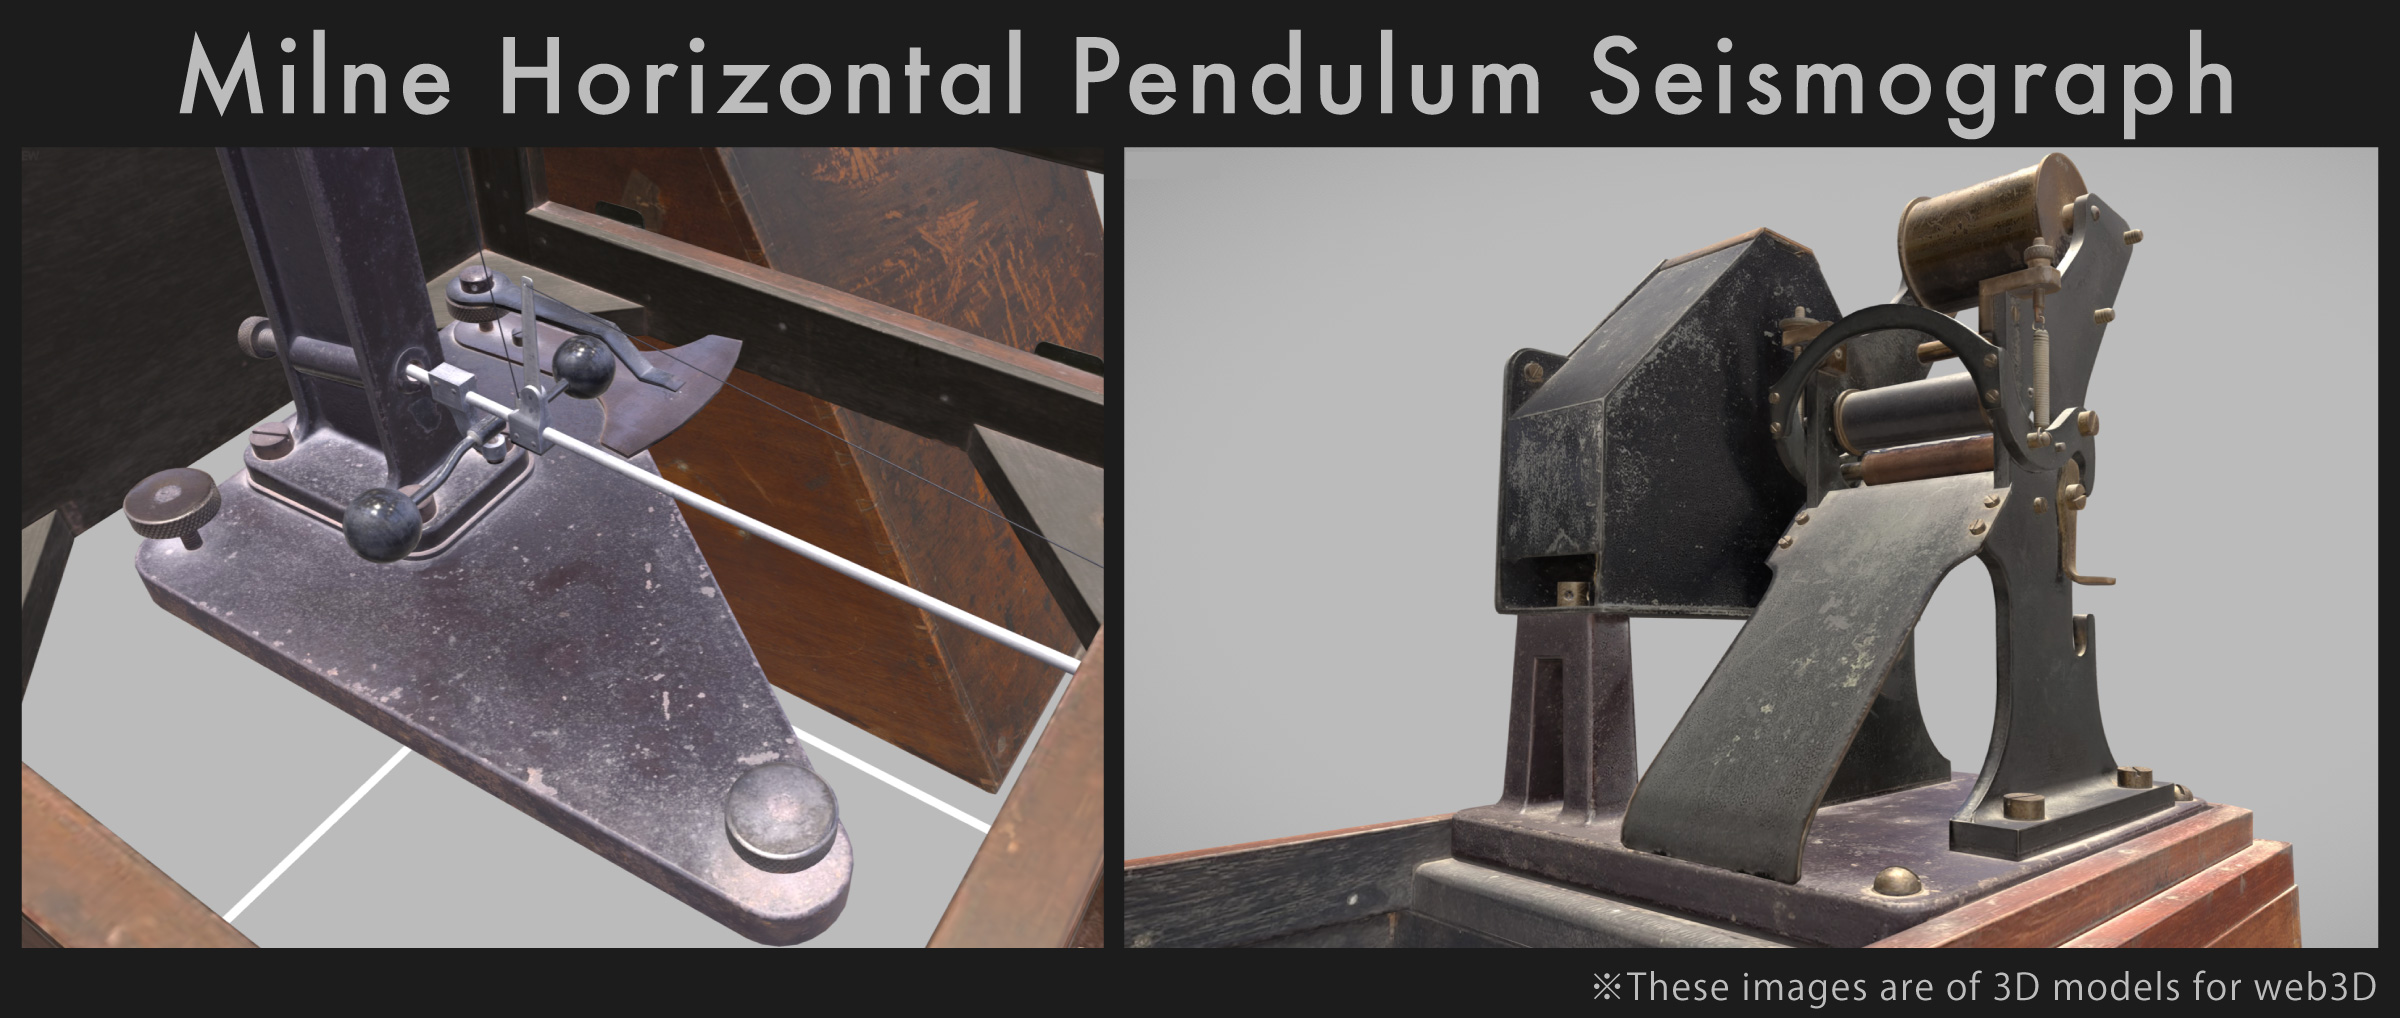 Milne Horizontal Pendulum Seismograph 3D scanning model